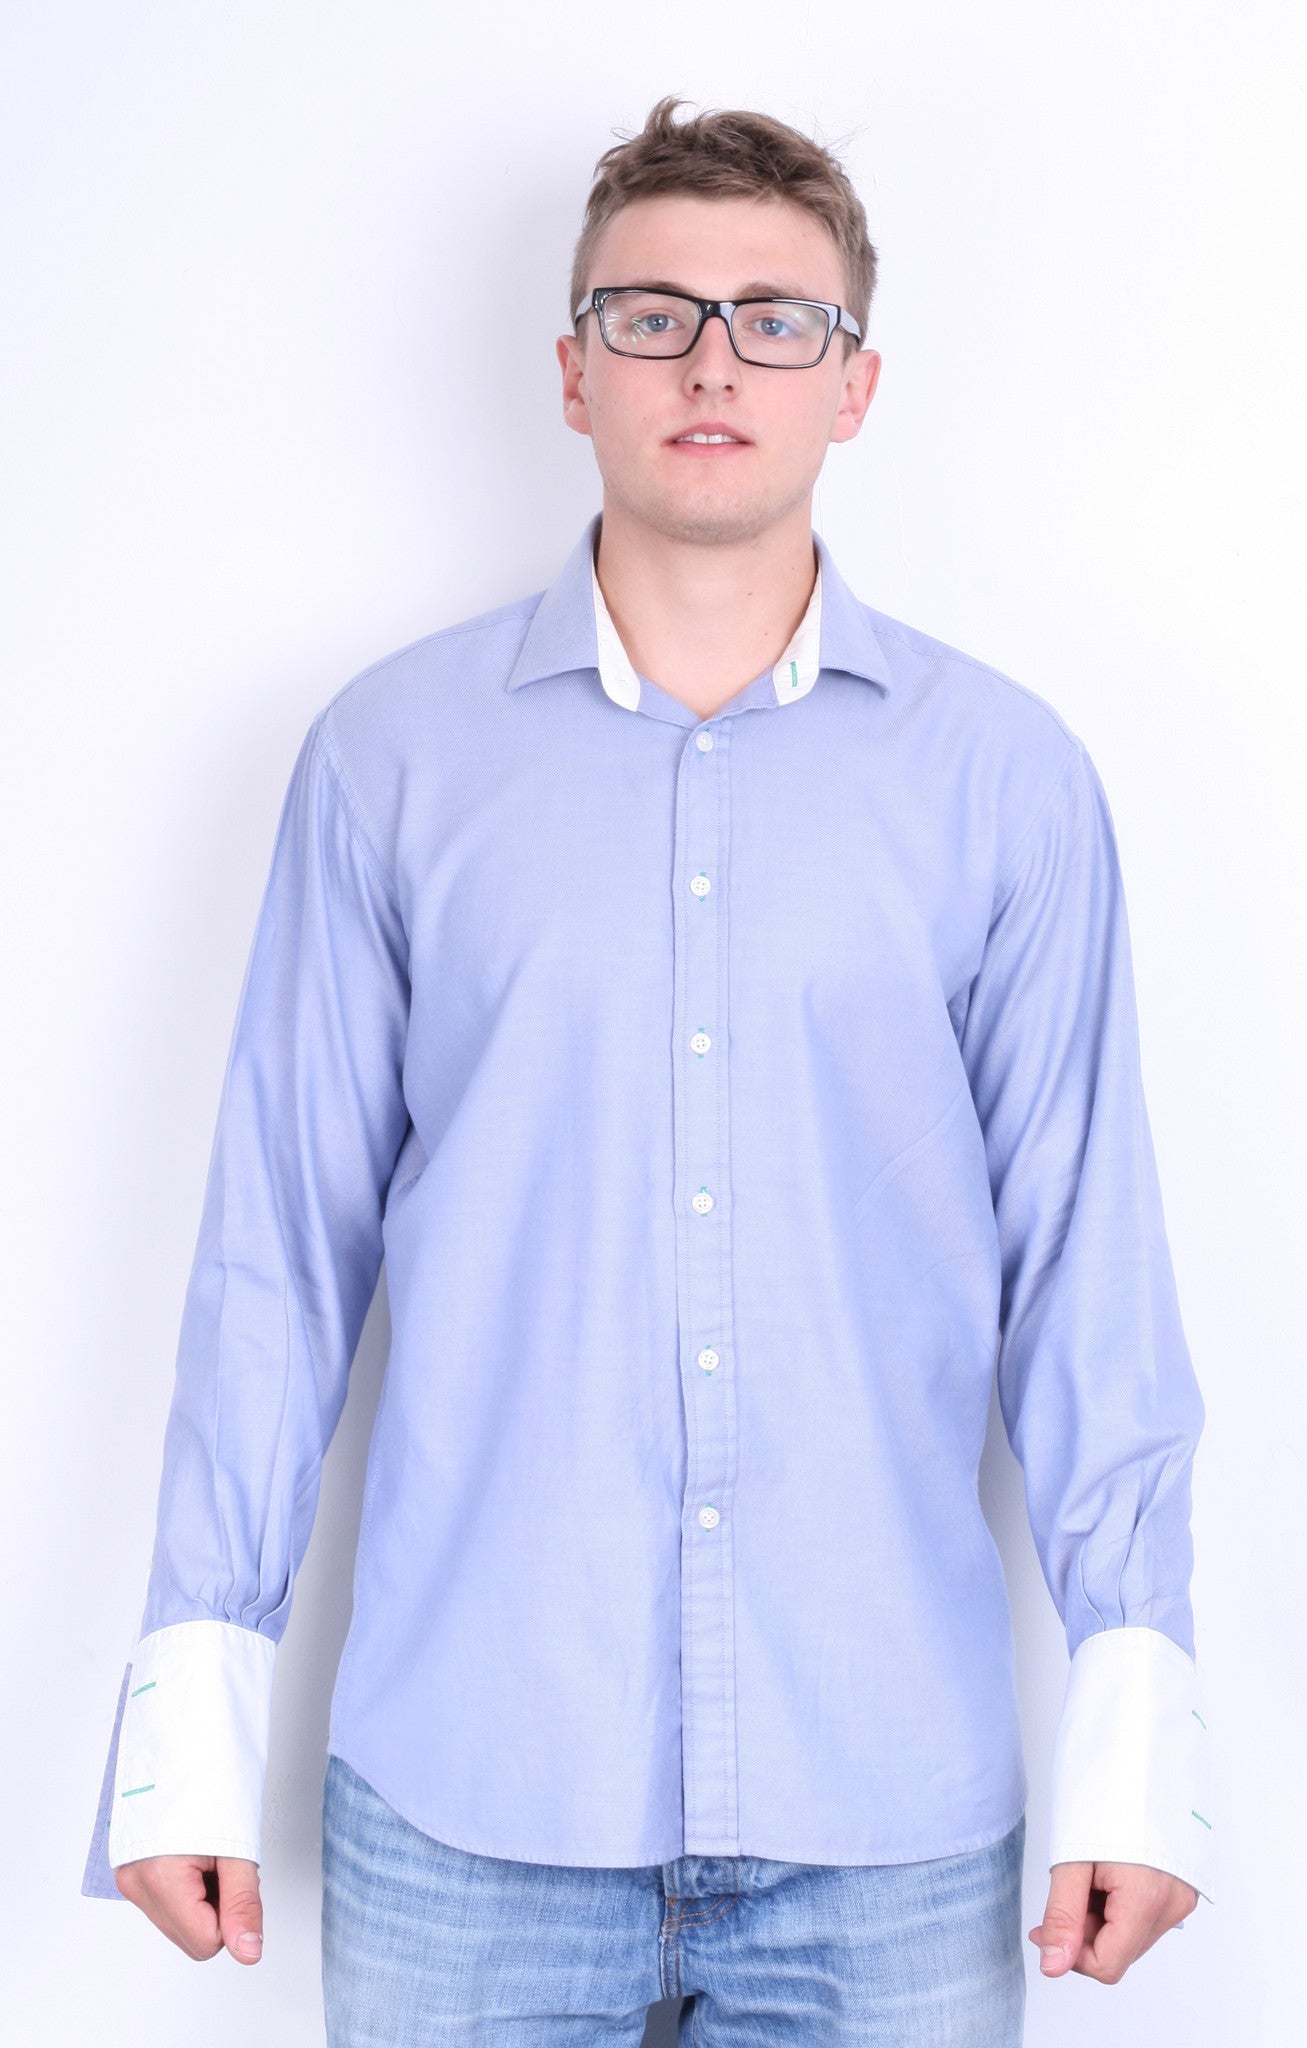 TM Lewin Men's Long Sleeve Button Down Shirts White Blue Size M L